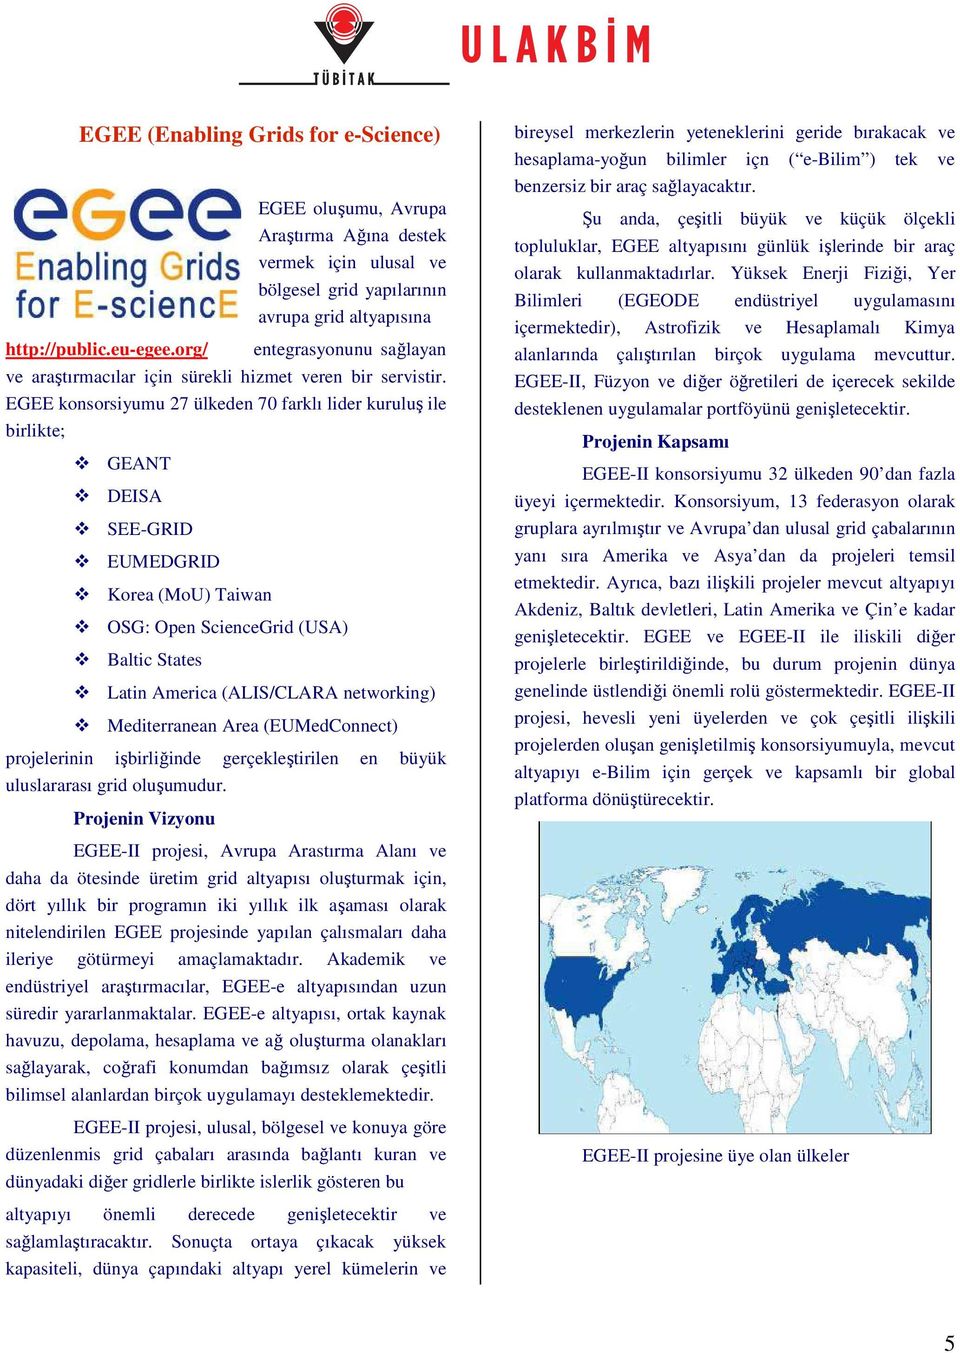 EGEE konsorsiyumu 27 ülkeden 70 farklı lider kuruluş ile birlikte; GEANT DEISA SEE-GRID EUMEDGRID Korea (MoU) Taiwan OSG: Open ScienceGrid (USA) Baltic States Latin America (ALIS/CLARA networking)